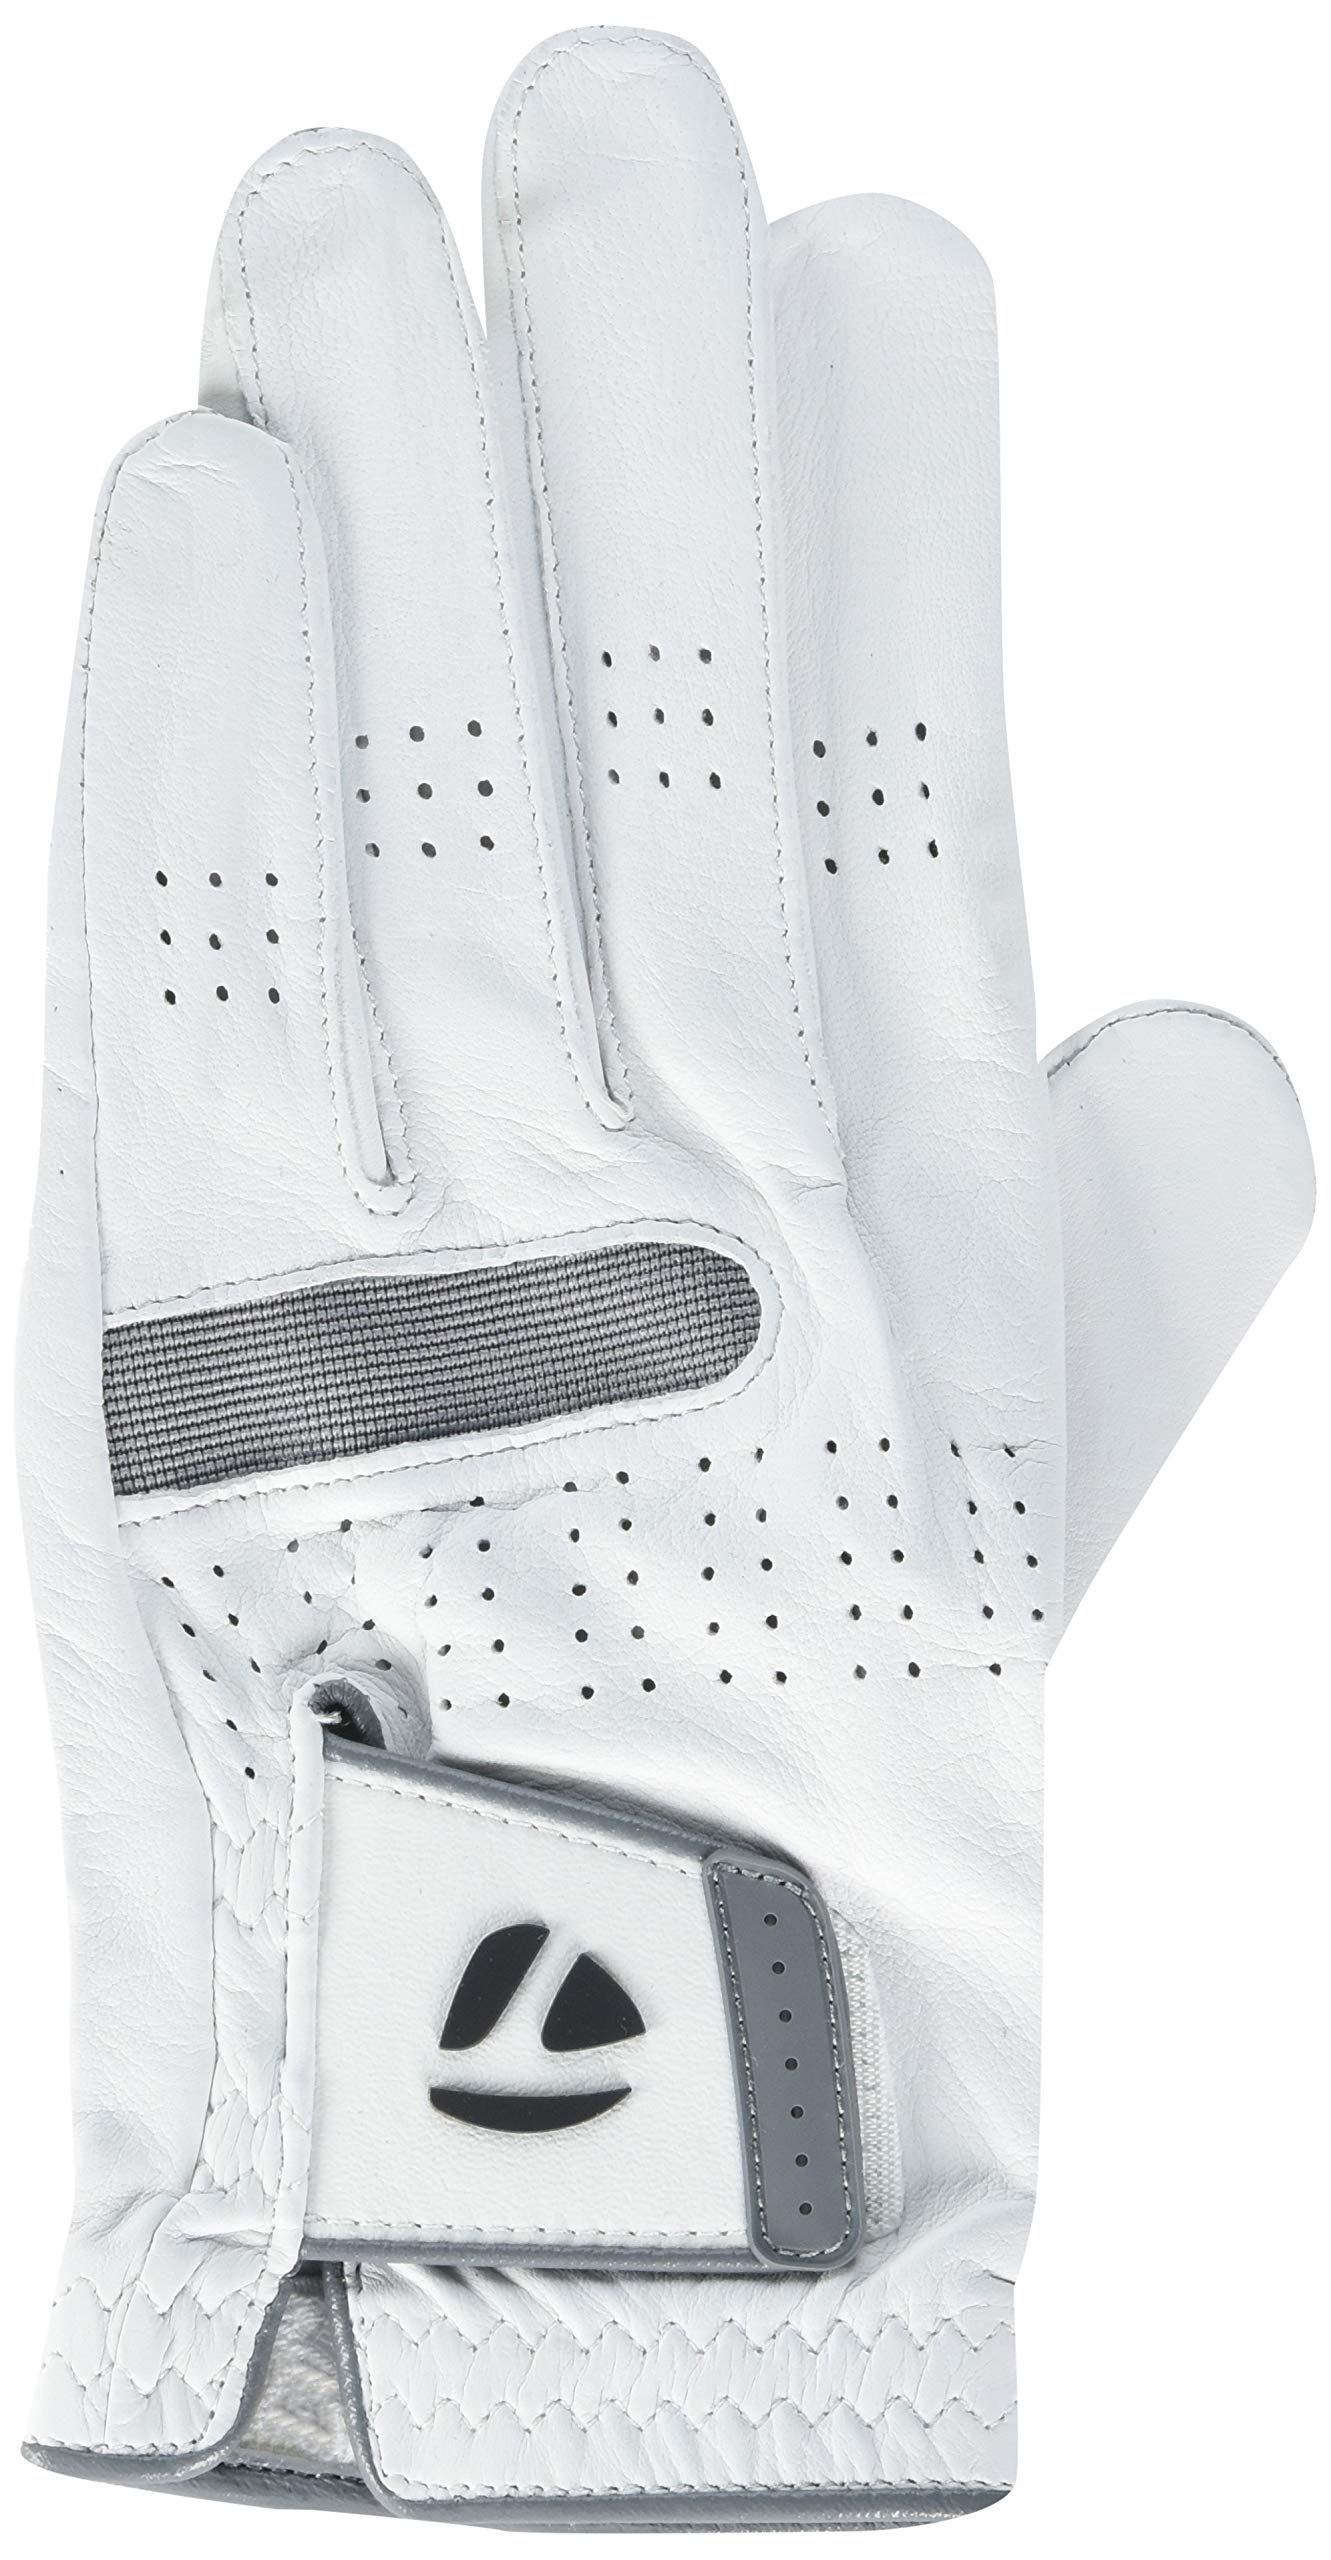 TaylorMade 2021 Tour Preferred Flex Glove